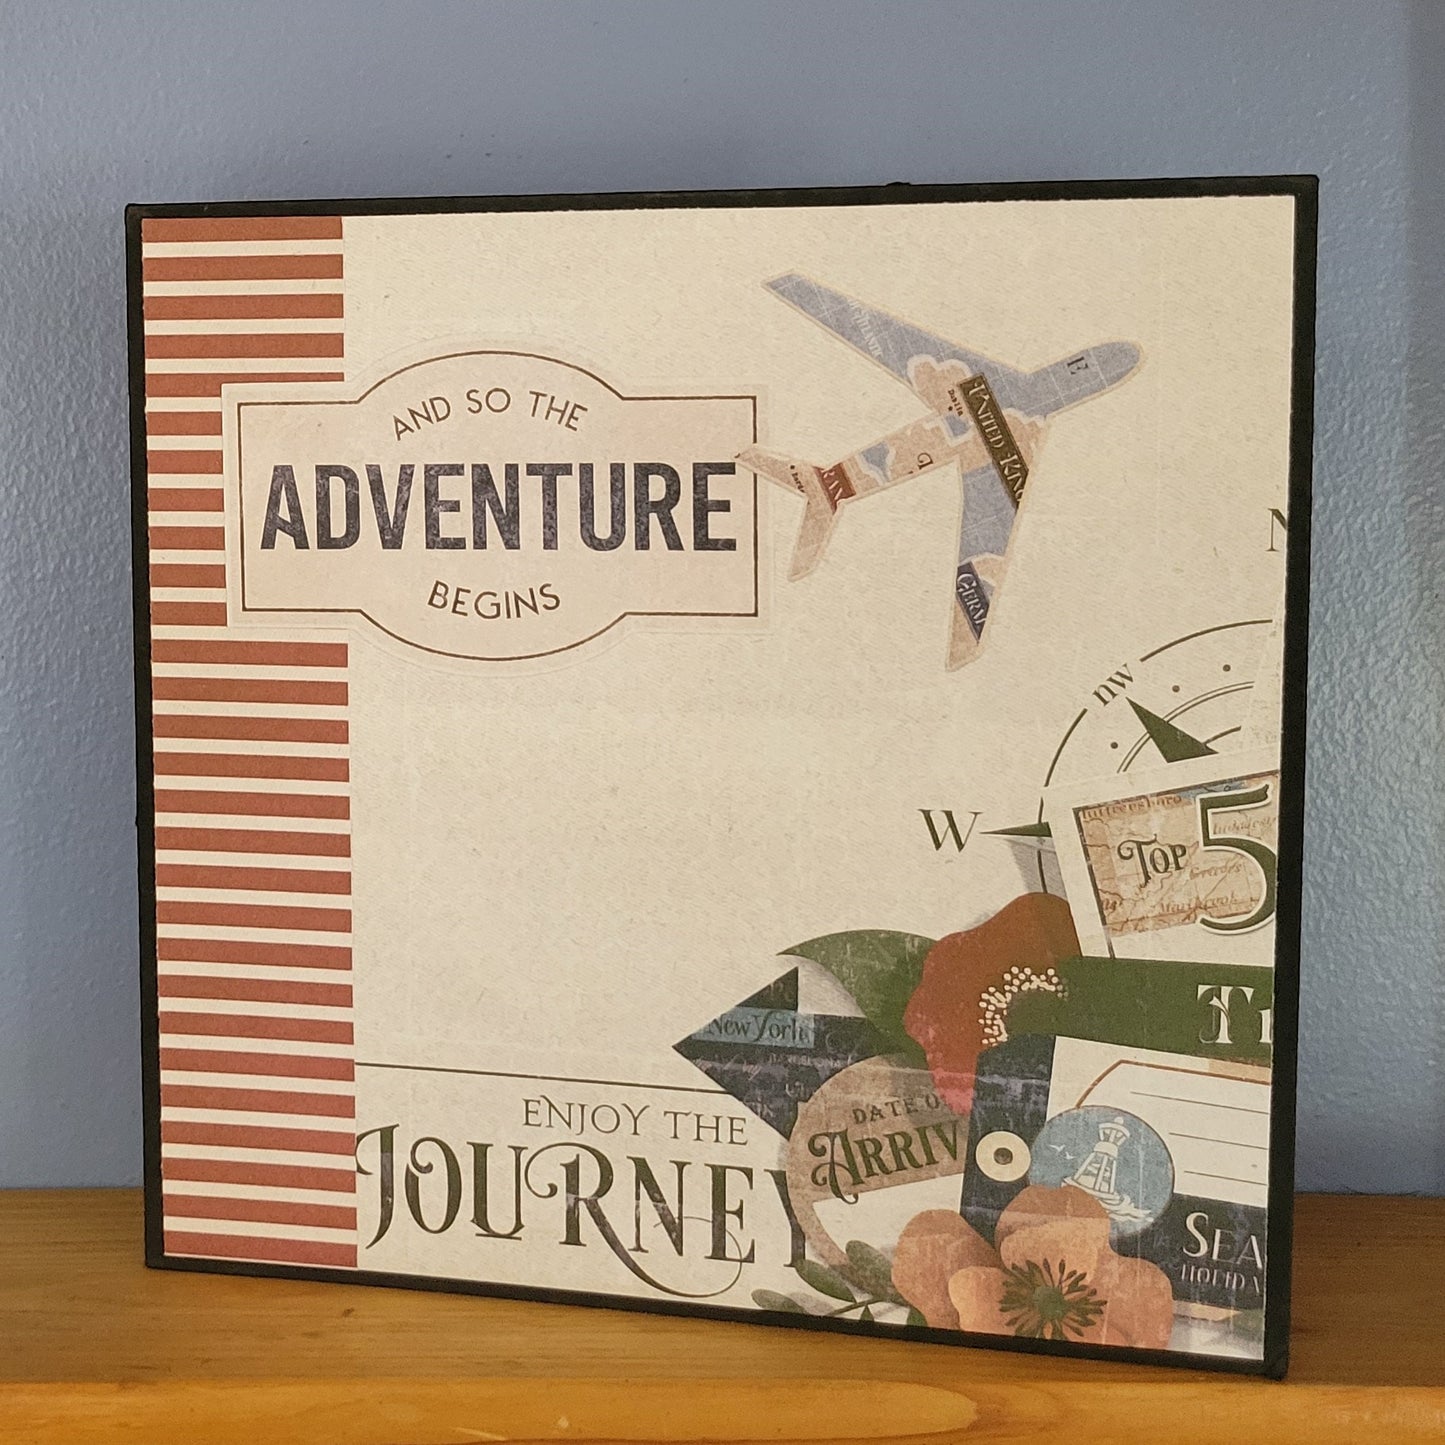 Travel Photo Album front cover.